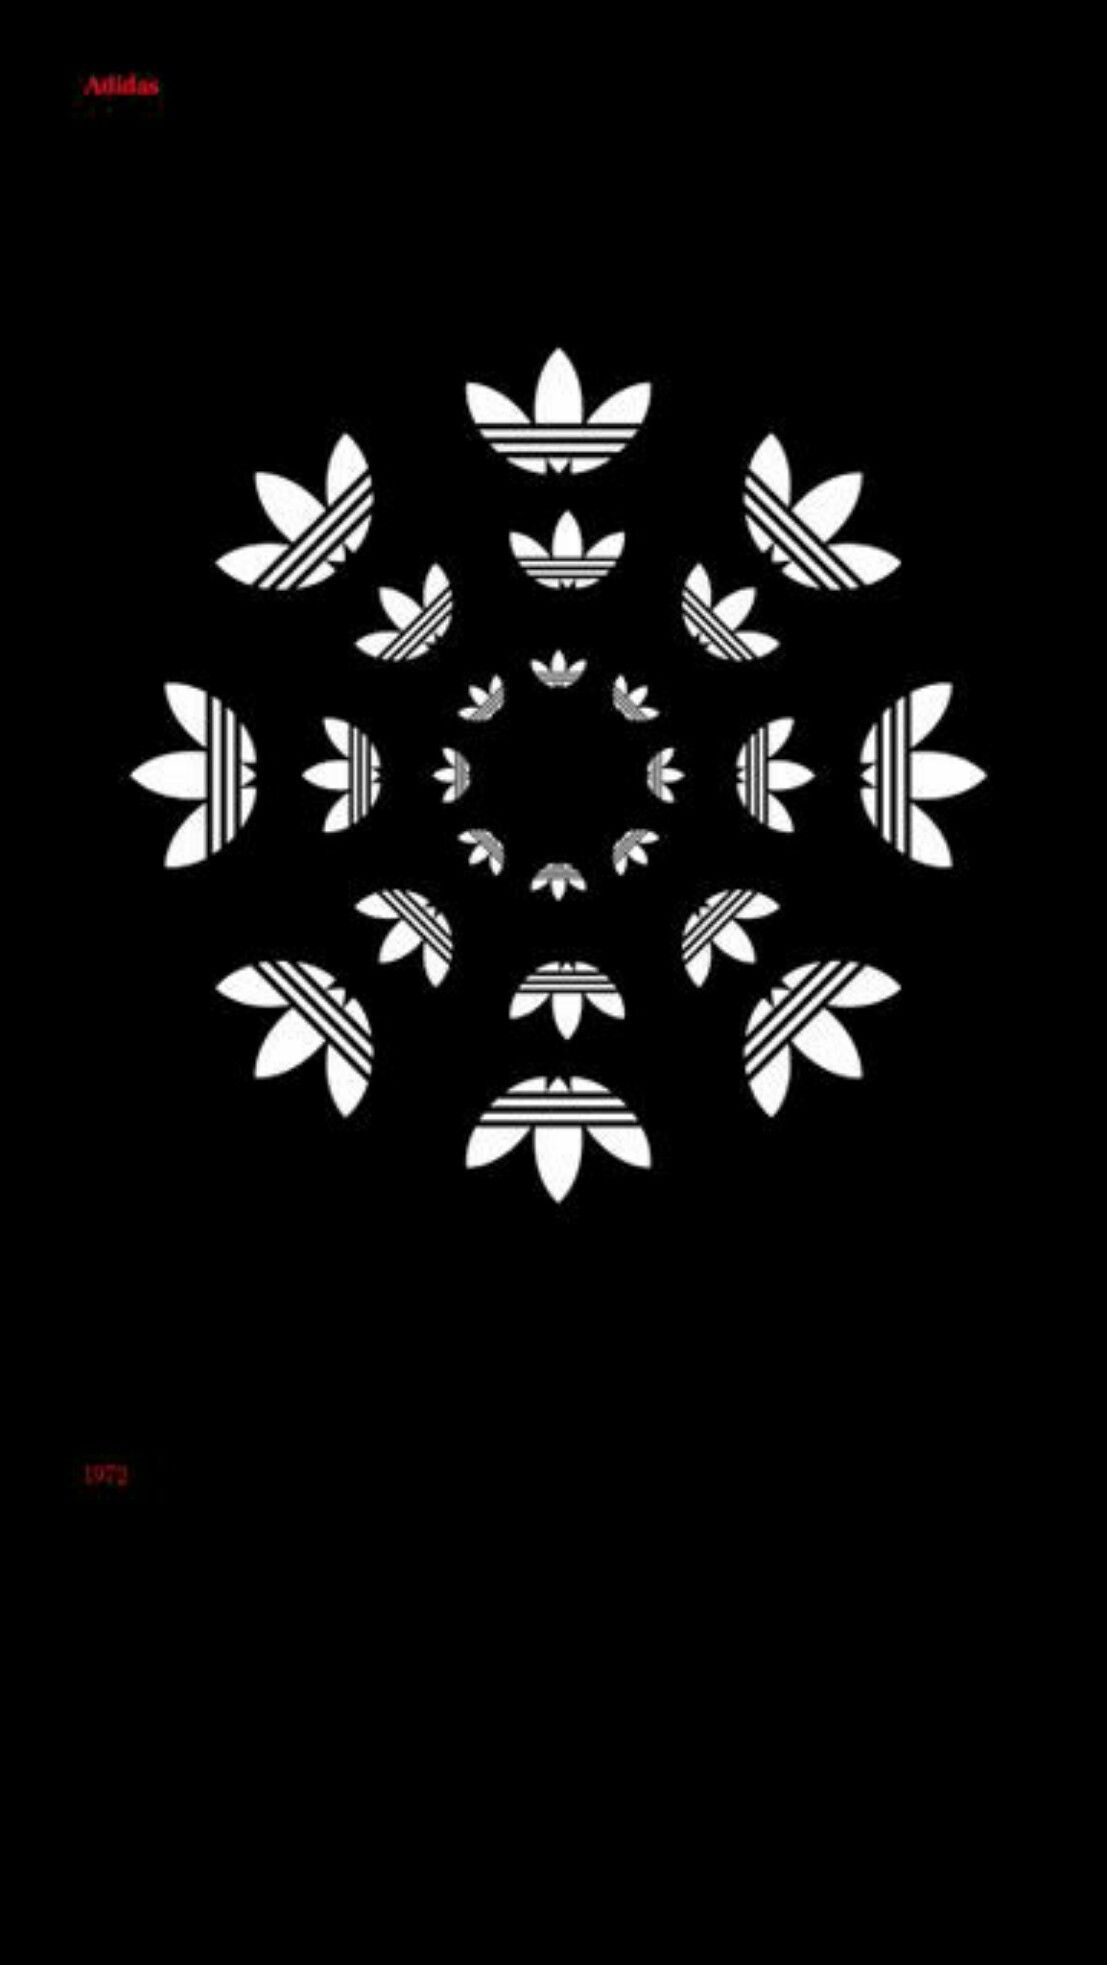 Black Adidas Wallpapers 4k Hd Black Adidas Backgrounds On Wallpaperbat